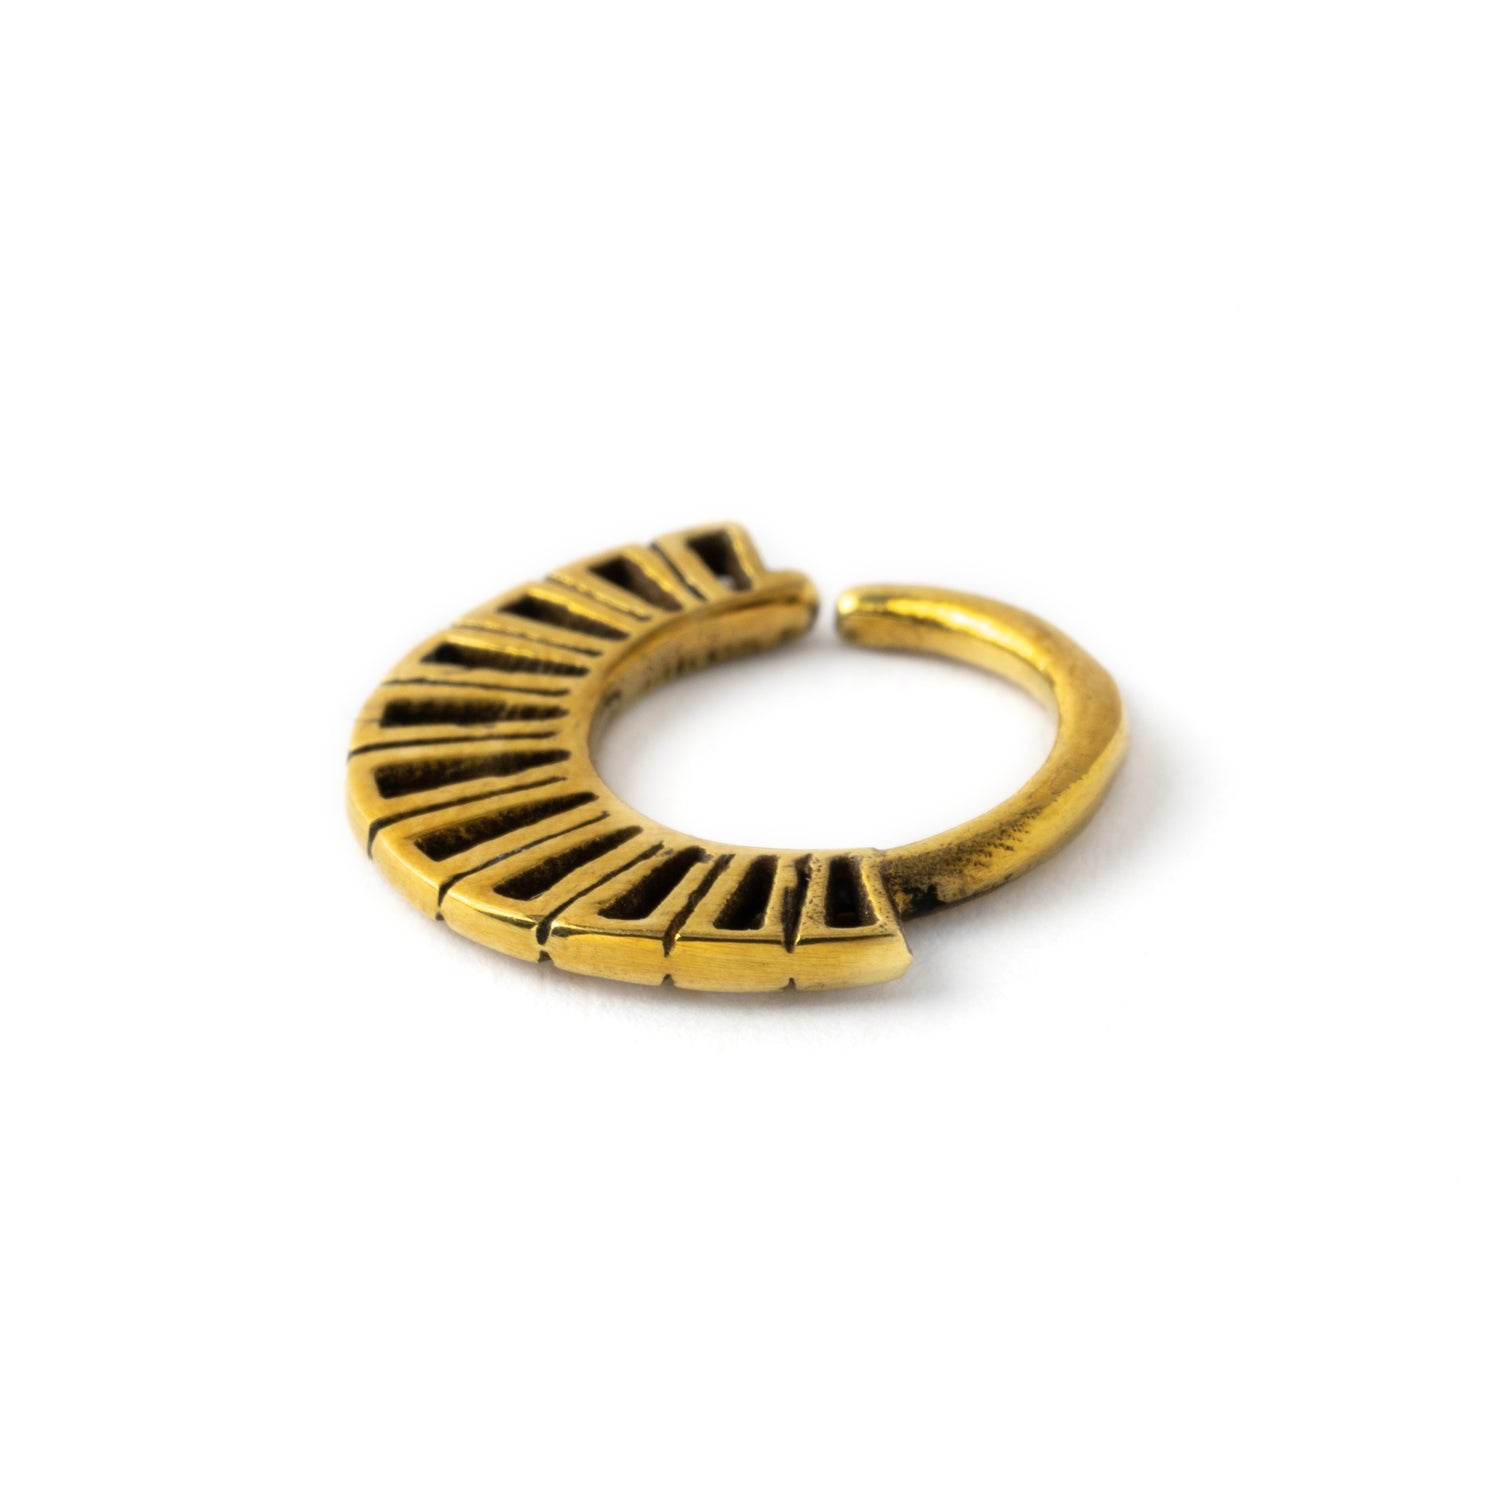 Aditi 18g (1mm) brass tribal geometric septum piercing ring side view